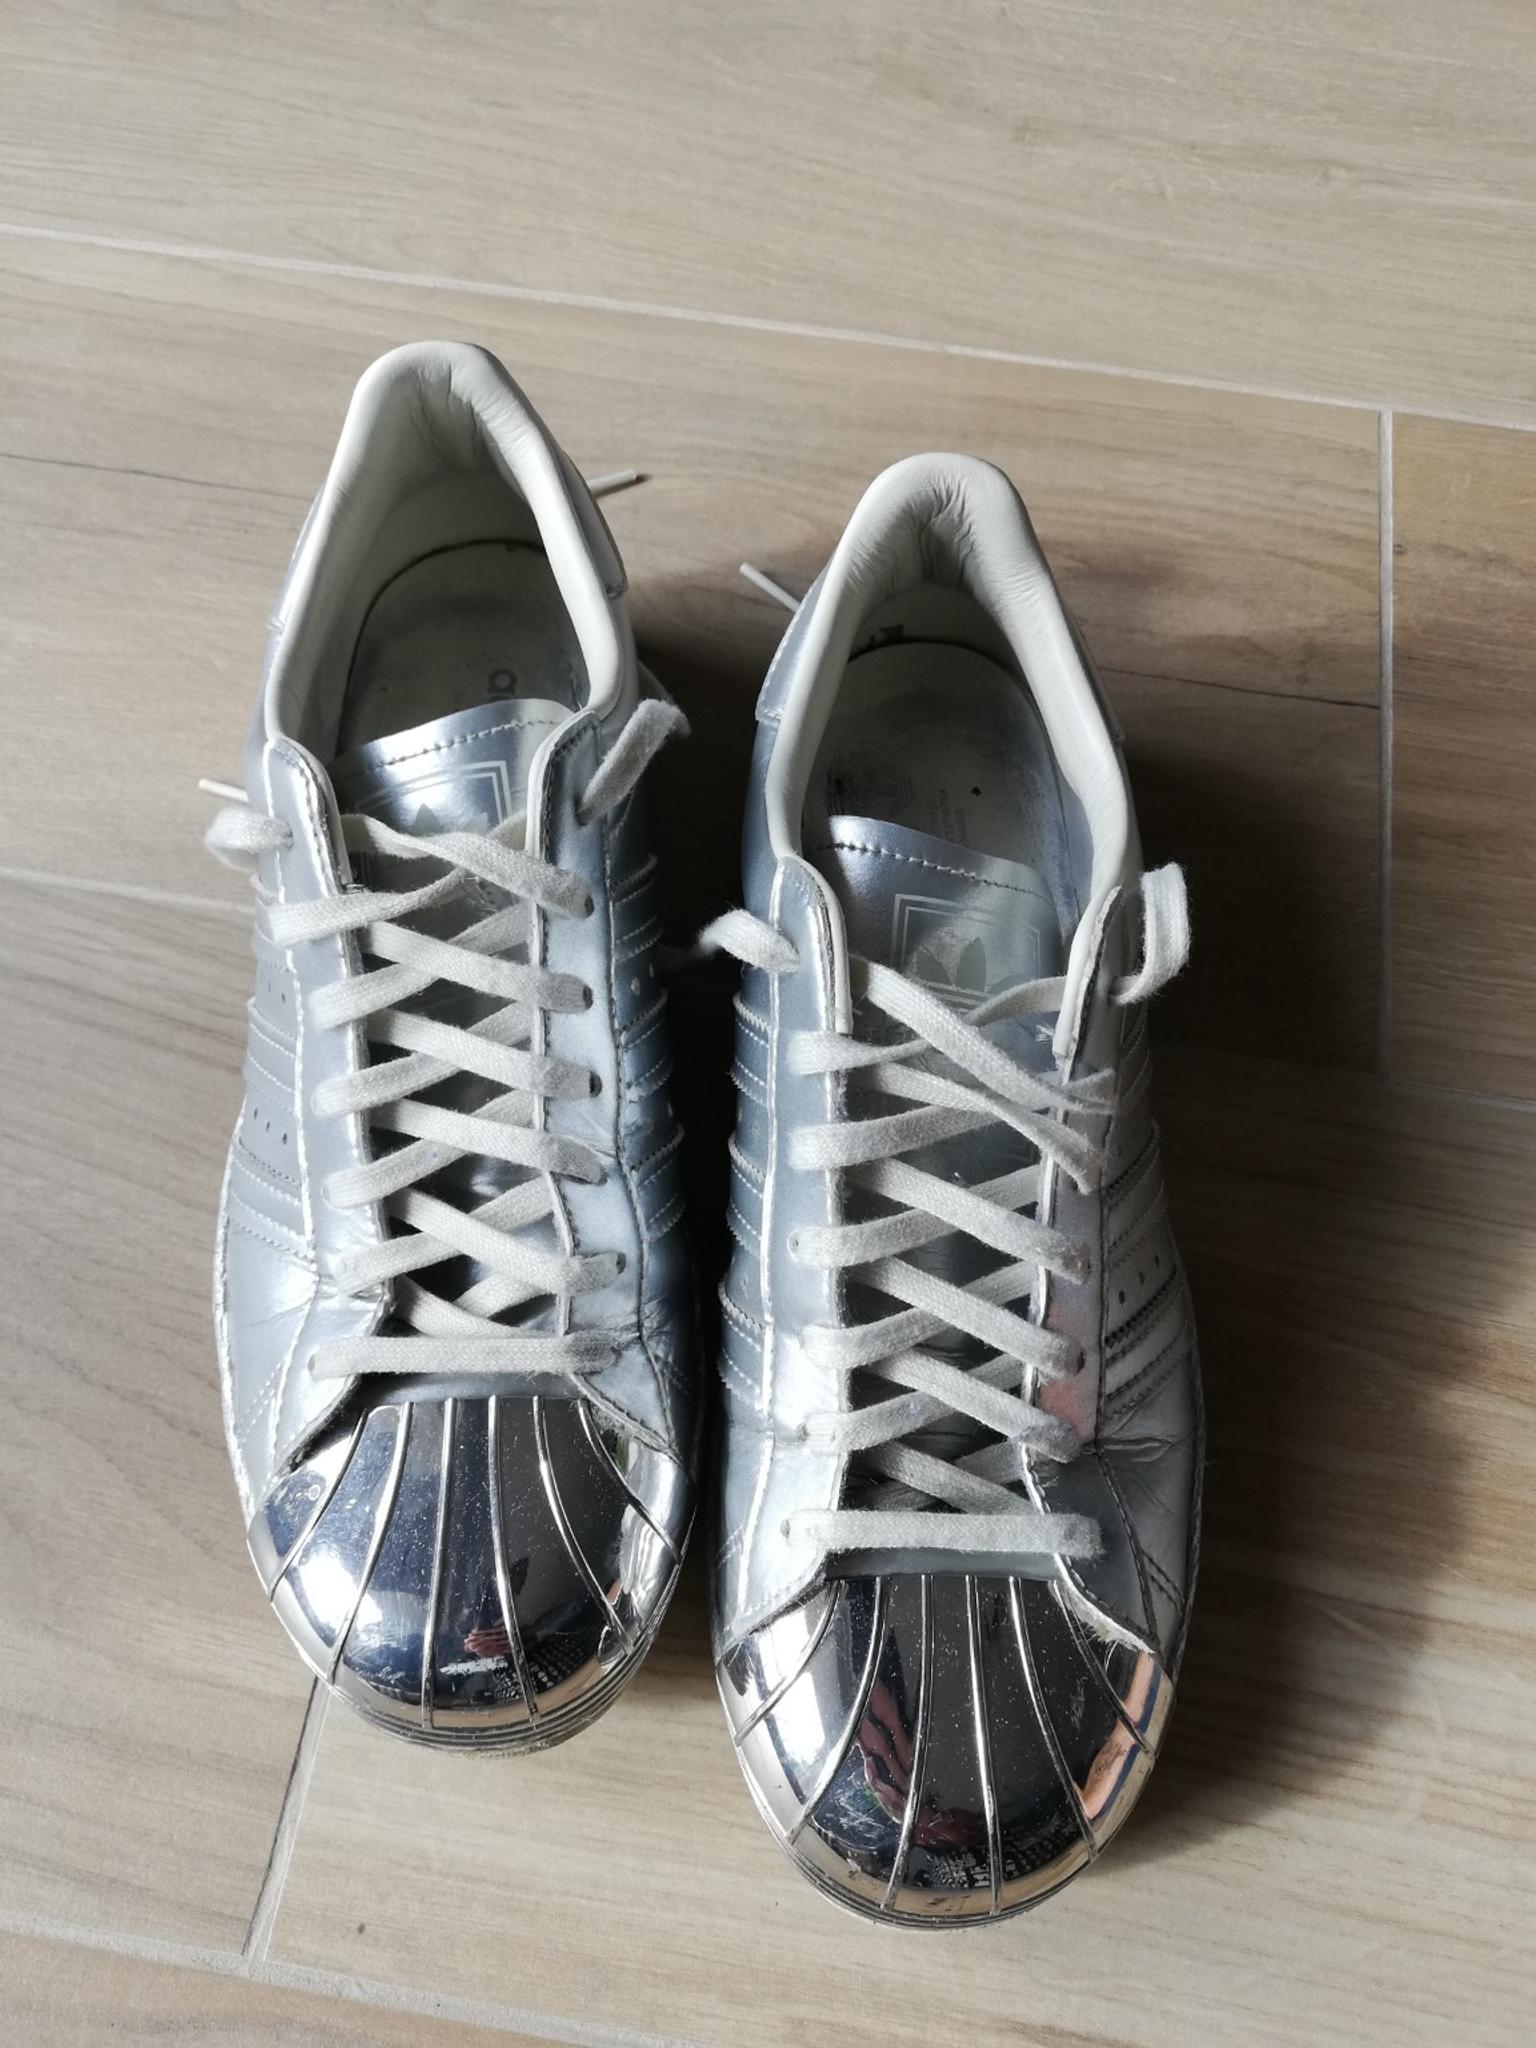 adidas superstar 80s silver metallic